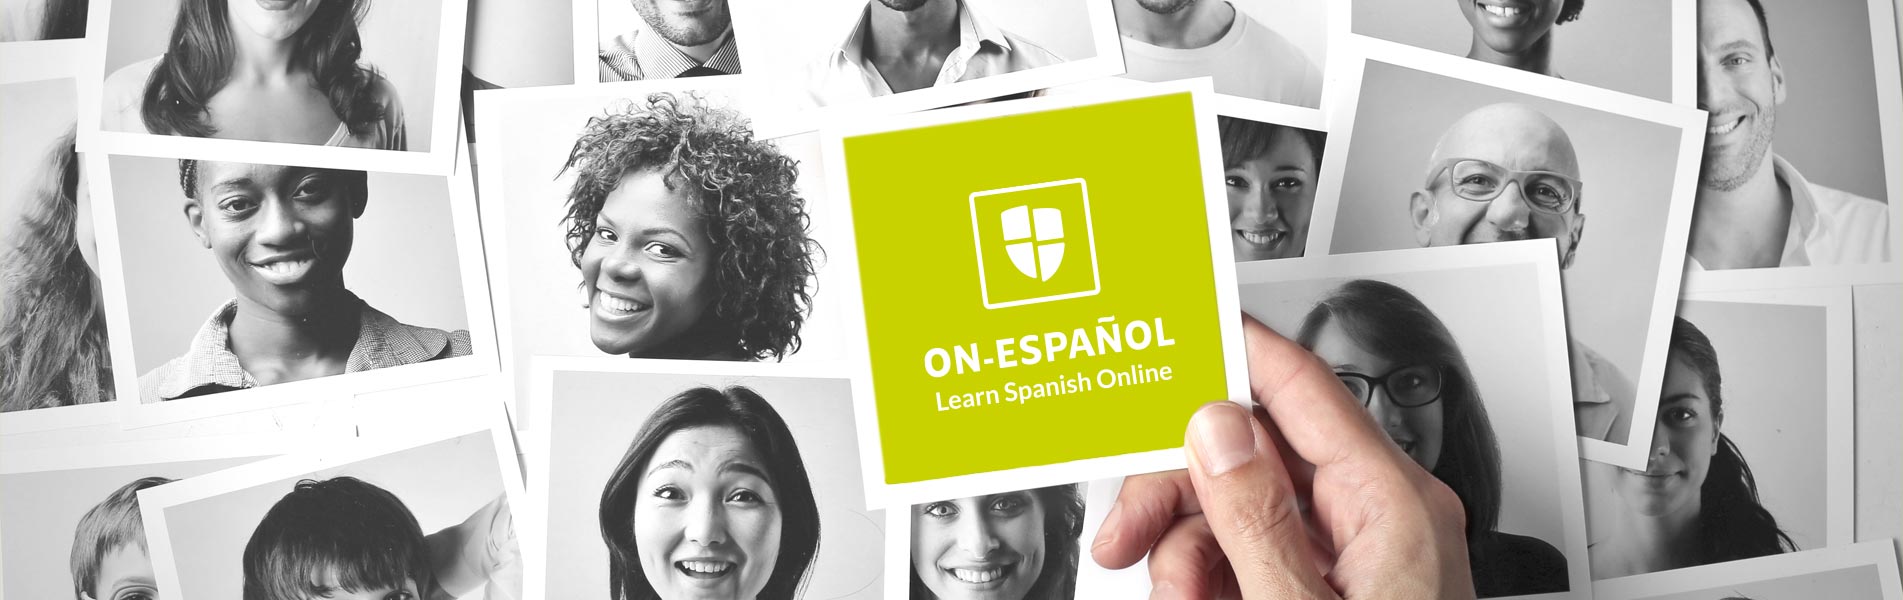 Learn Spanish online With online platform On-Español